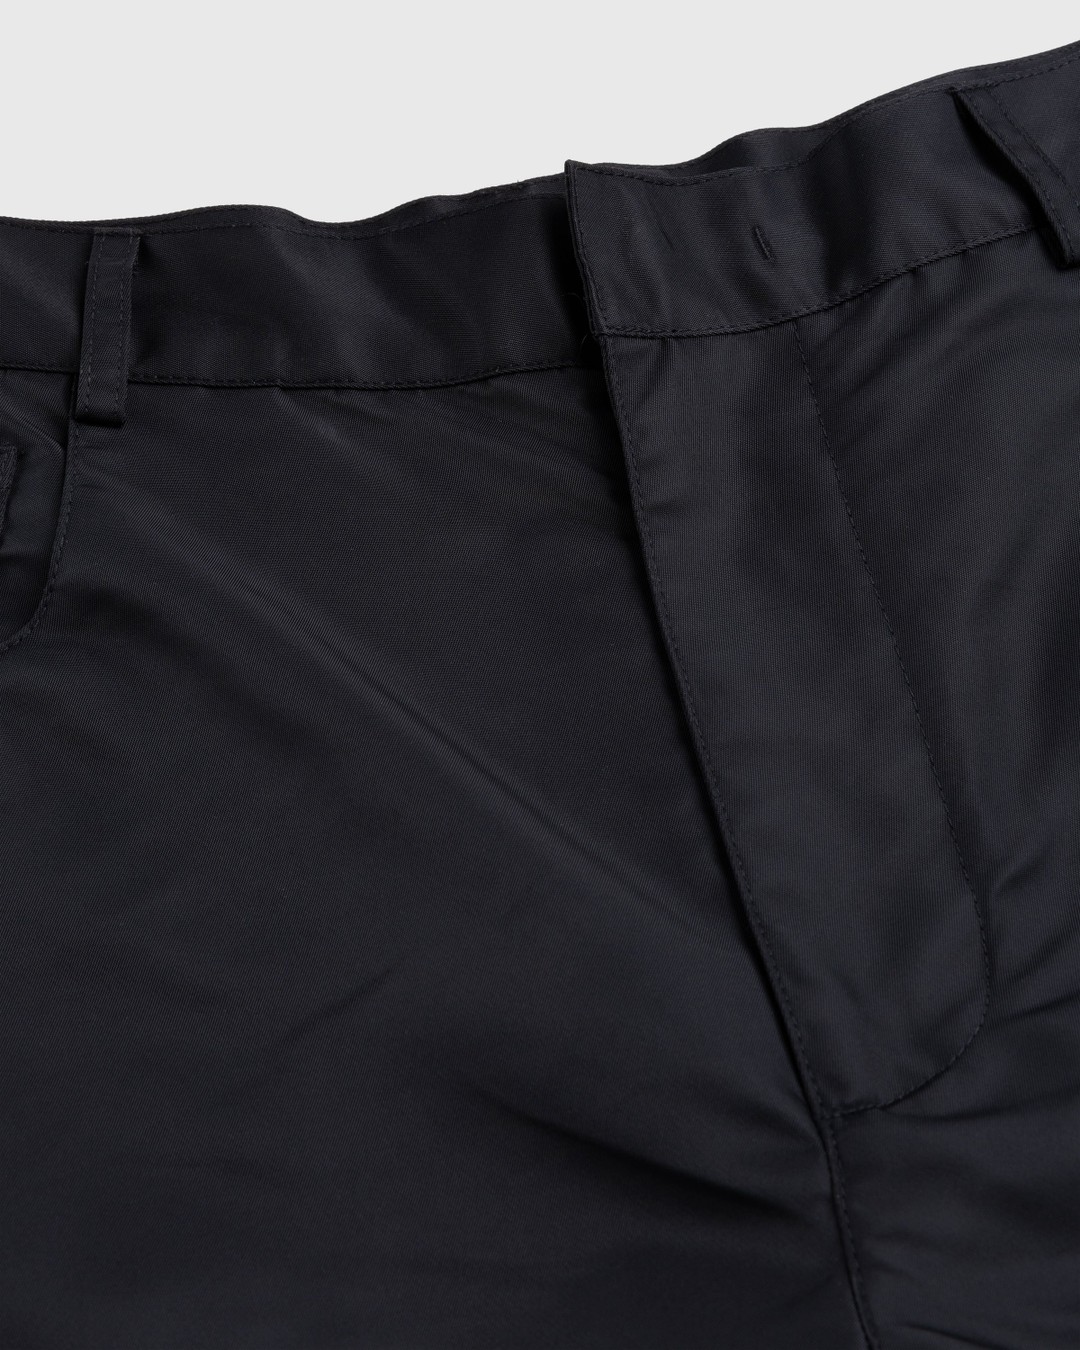 Trussardi – Nylon Shorts Black - Shorts - Black - Image 4